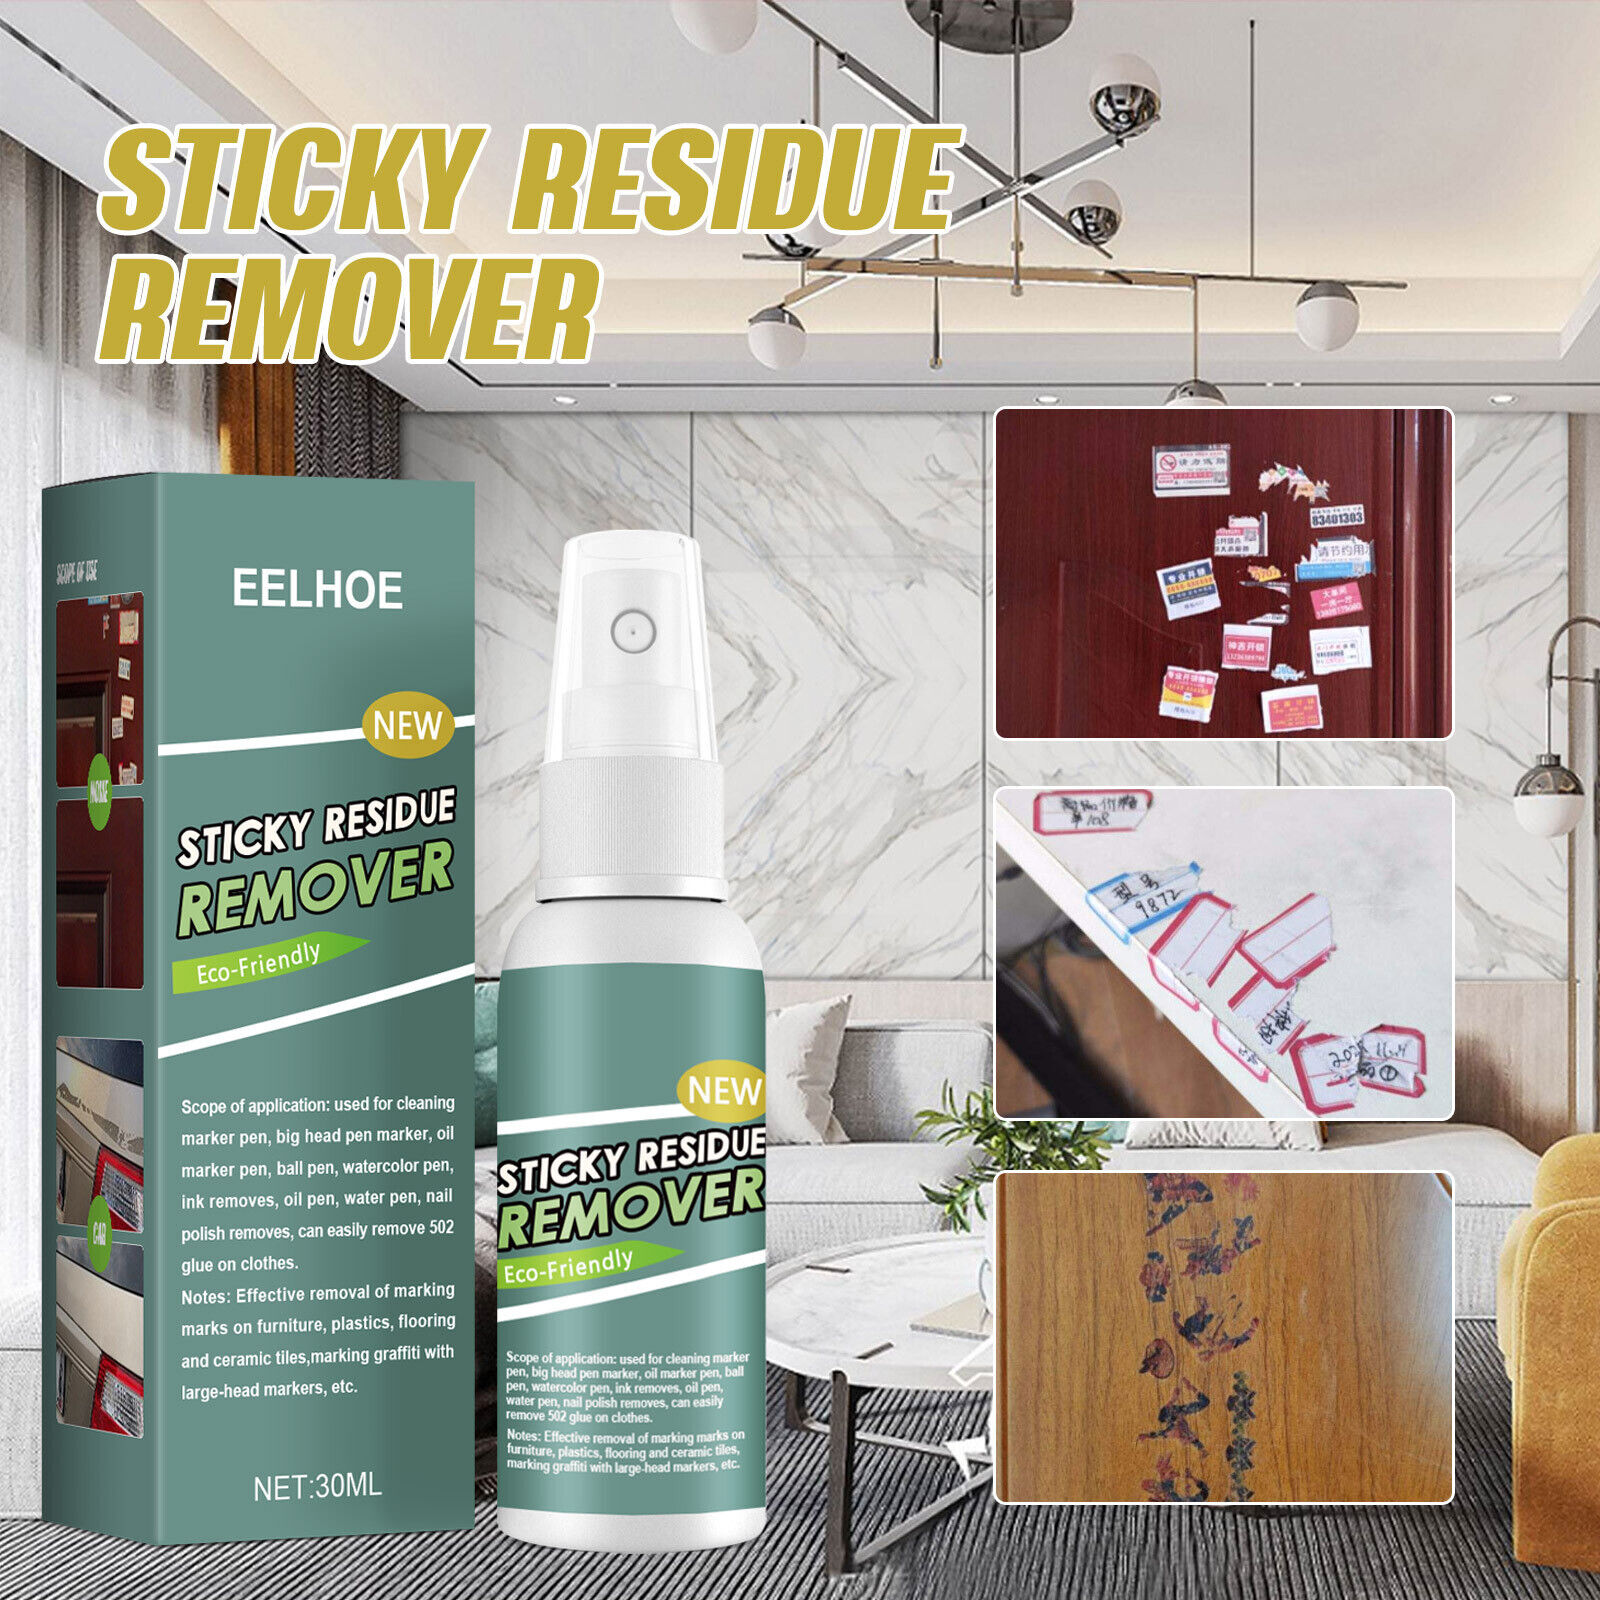 Sticker Remover Spray, Adhesive Residu E Remover For Removing Stubborn Residu Es